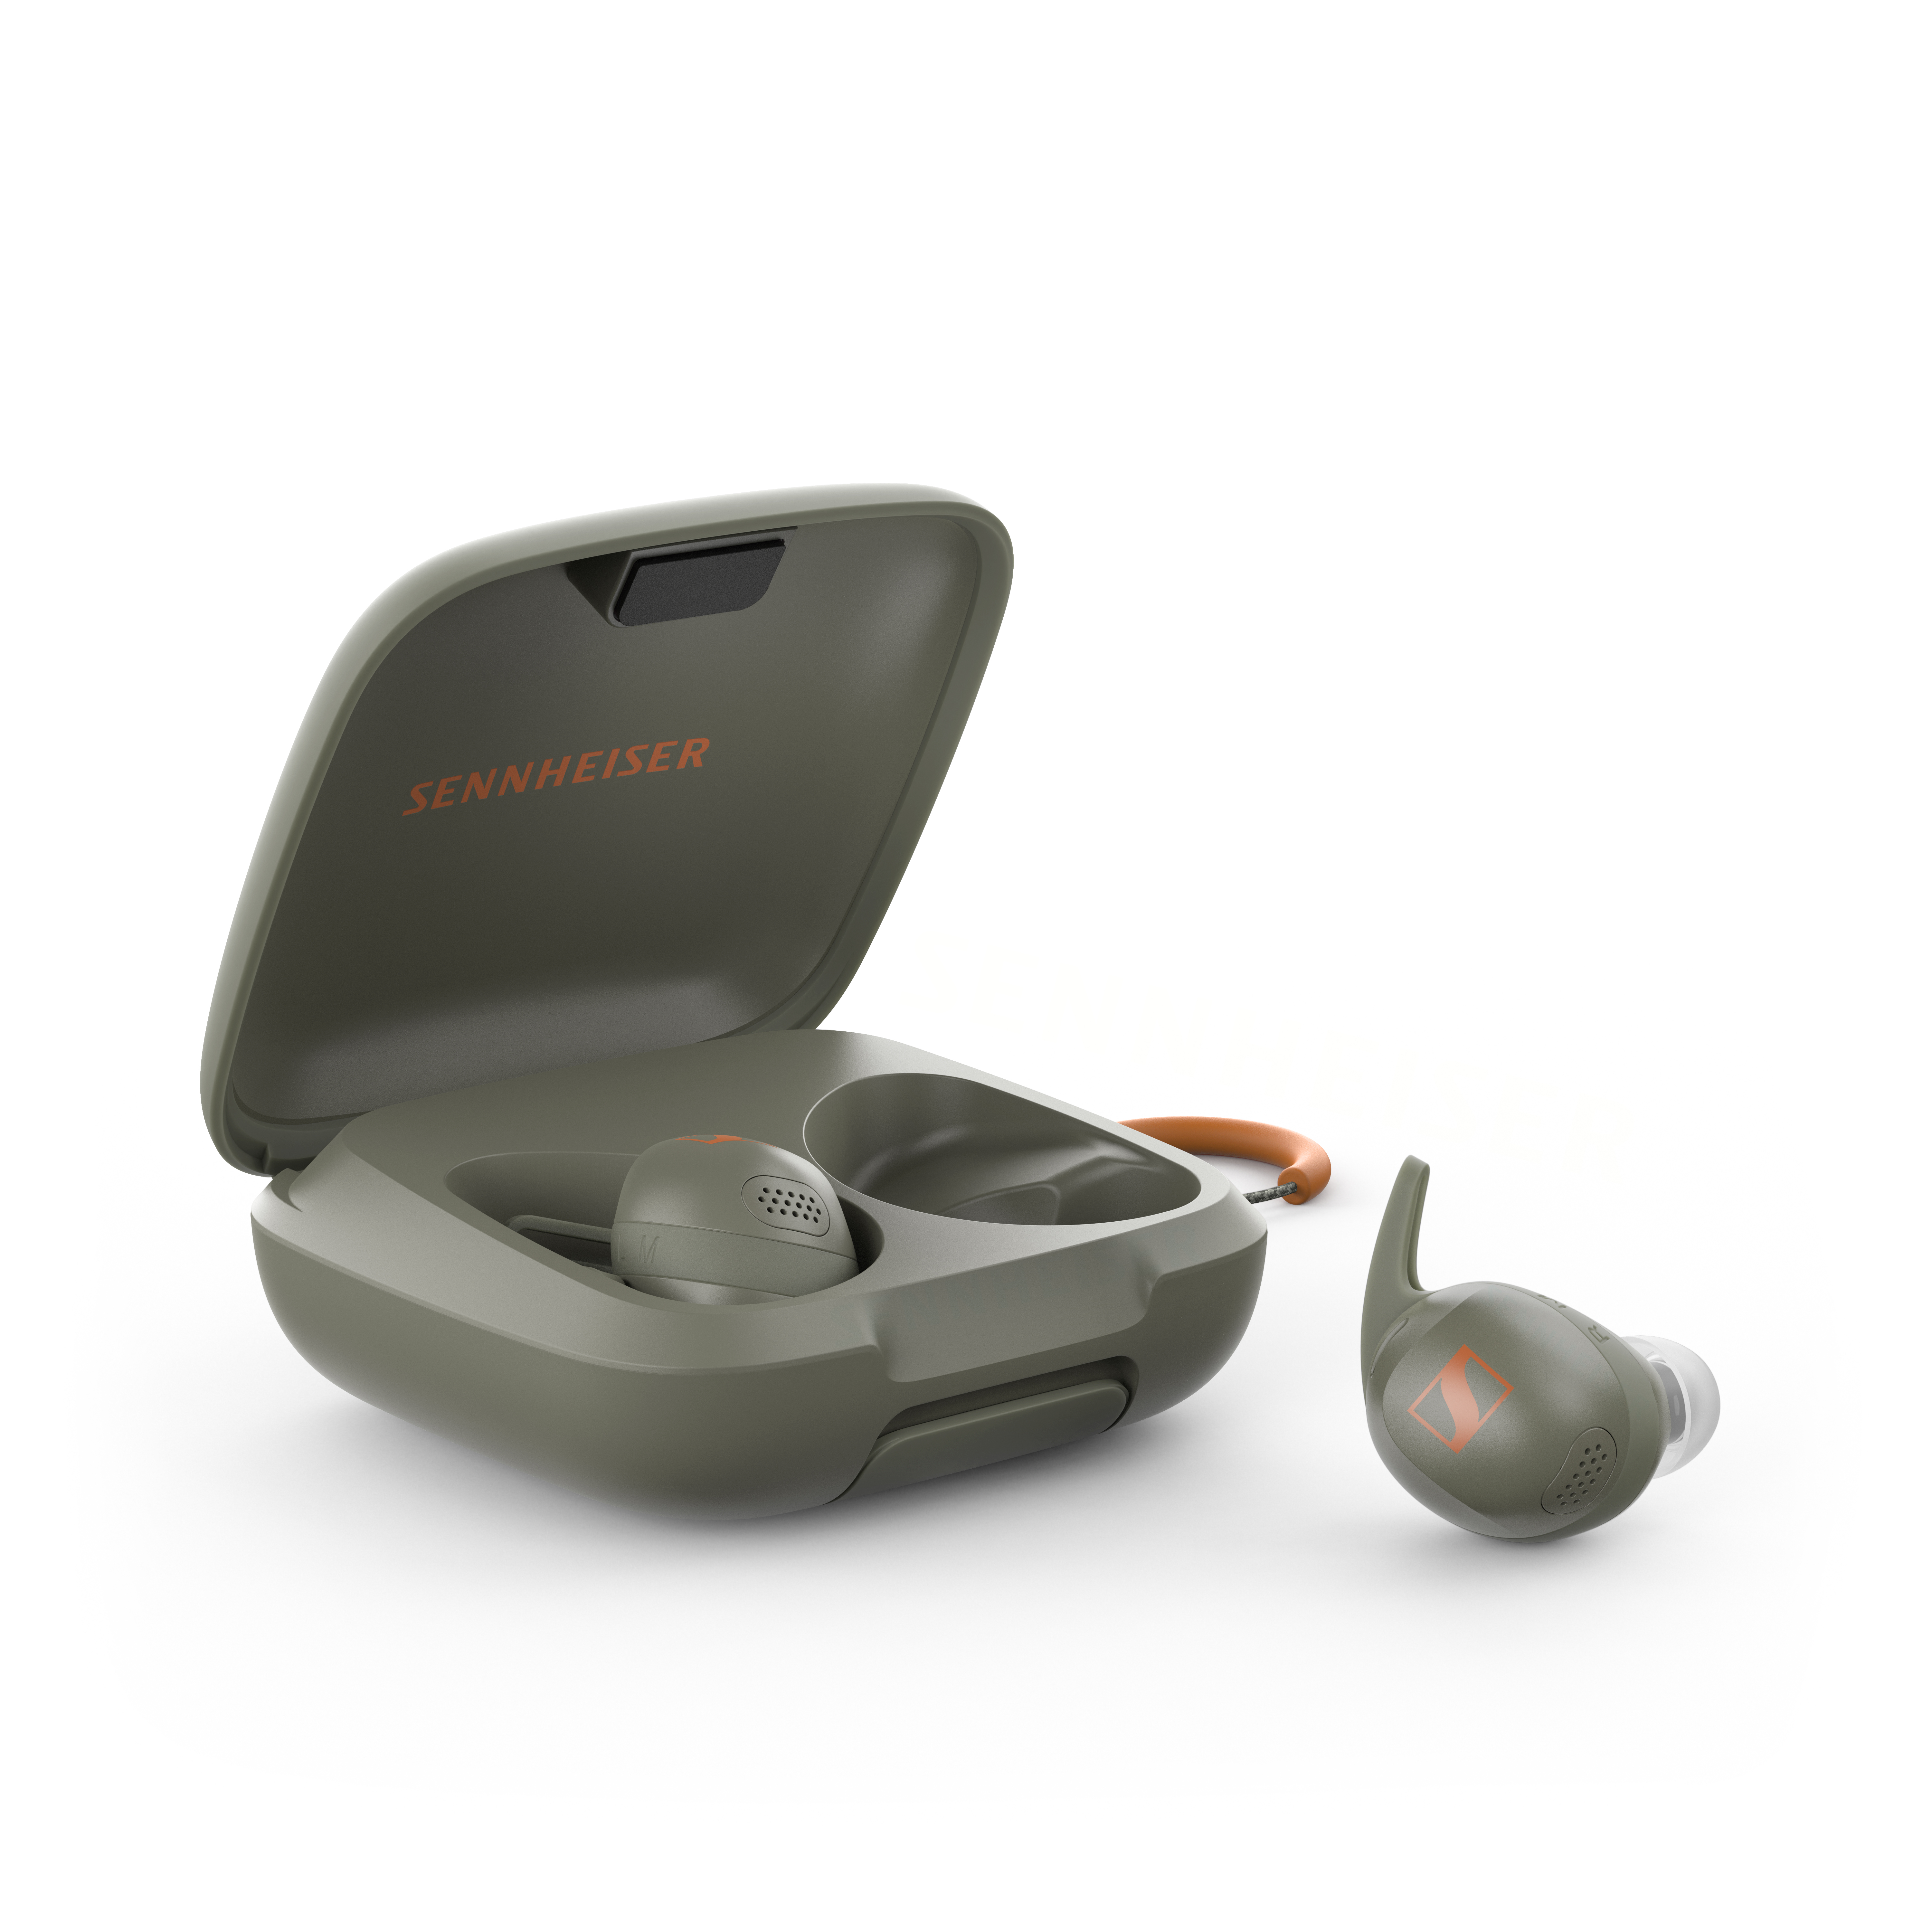 The premium Sennheiser MOMENTUM True Wireless 3 earbuds are